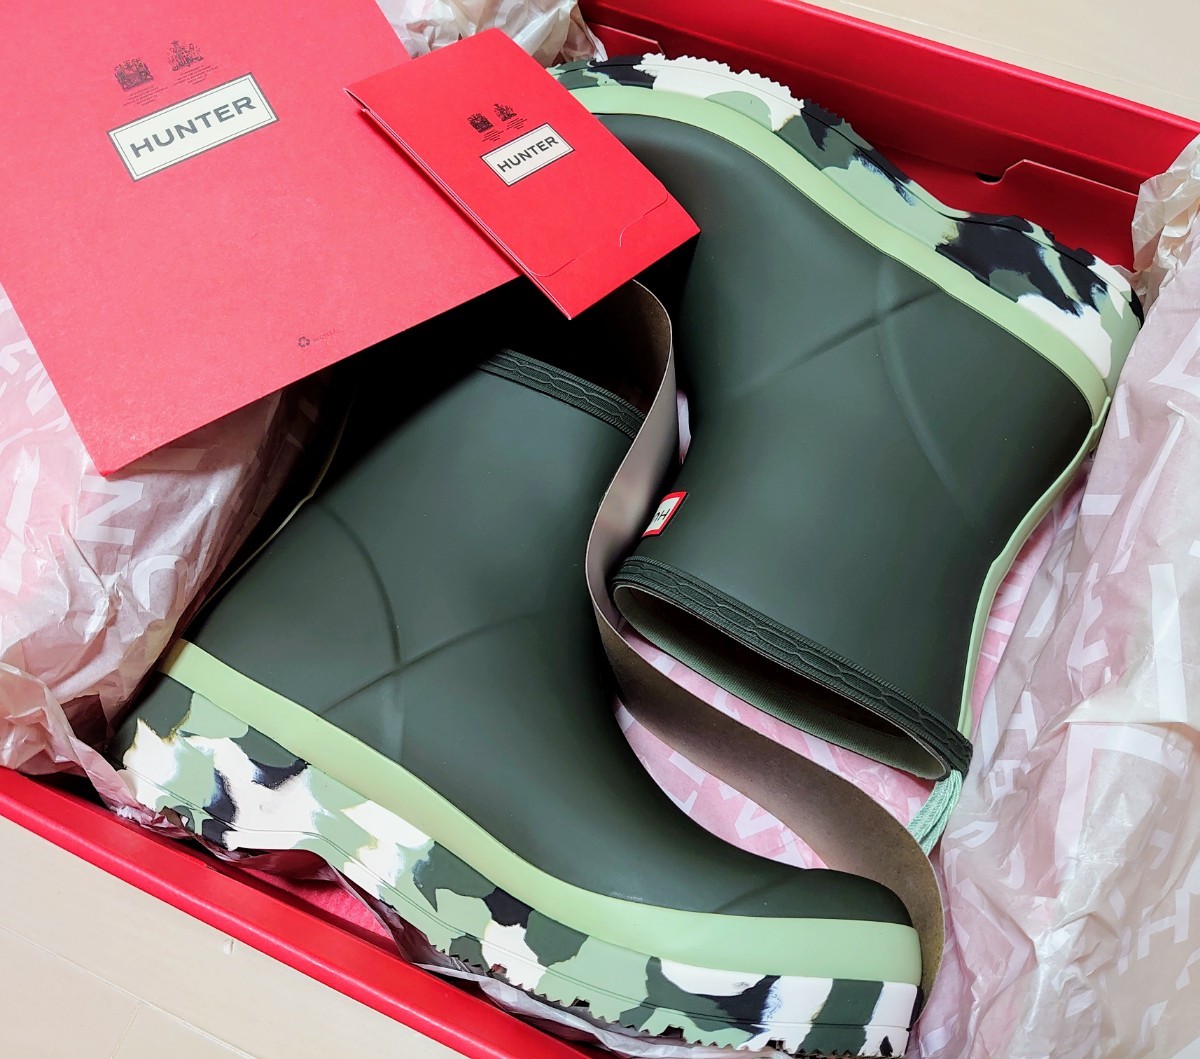  new goods *HUNTER Hunter Play Short Splash sole boots 23cm stylish rain boots waterproof boots outdoor fes